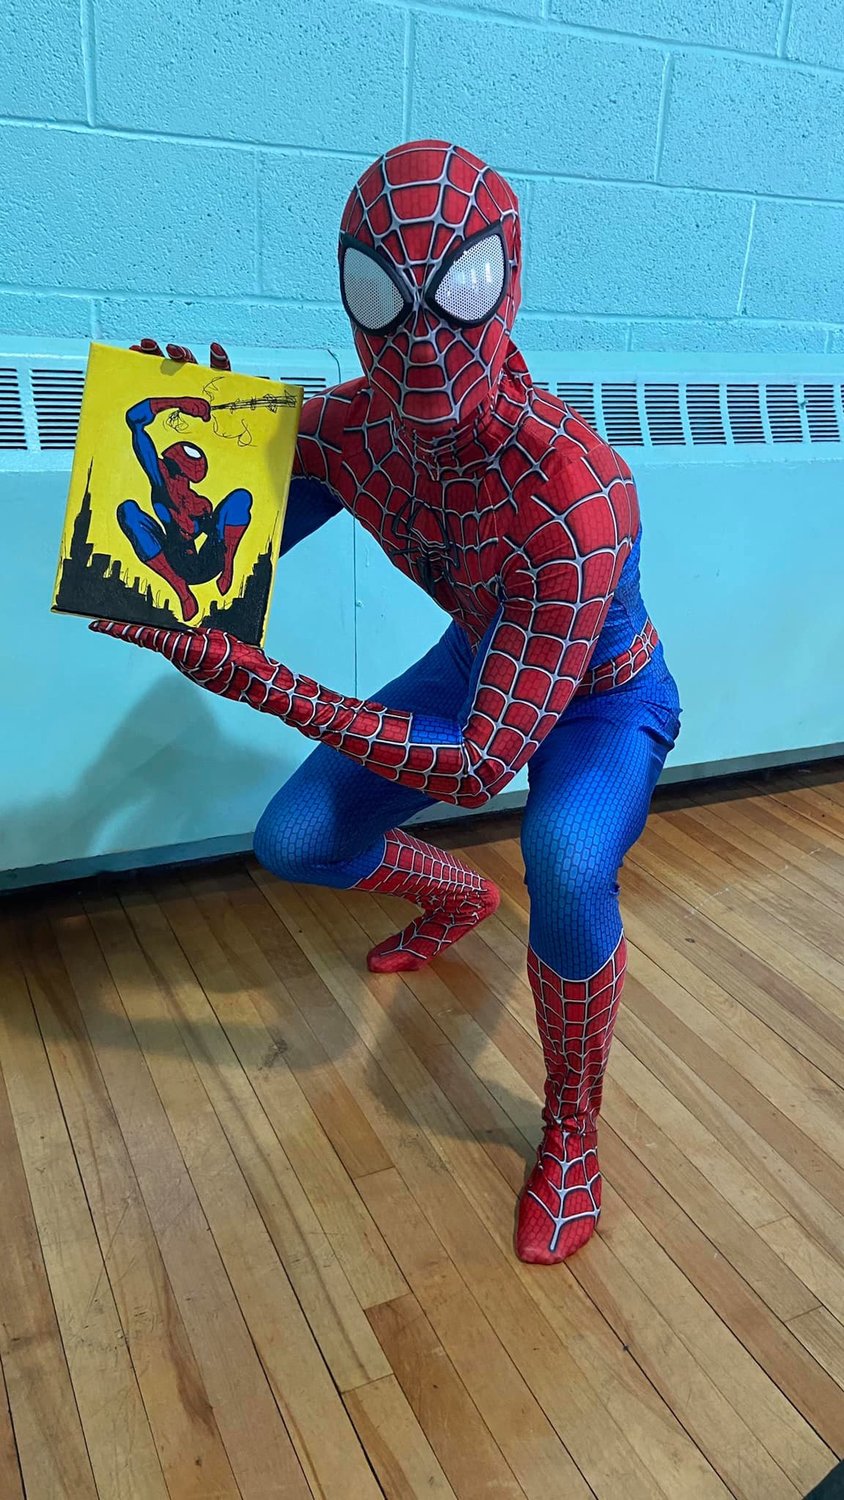 Spider-Man found some artwork he enjoyed.